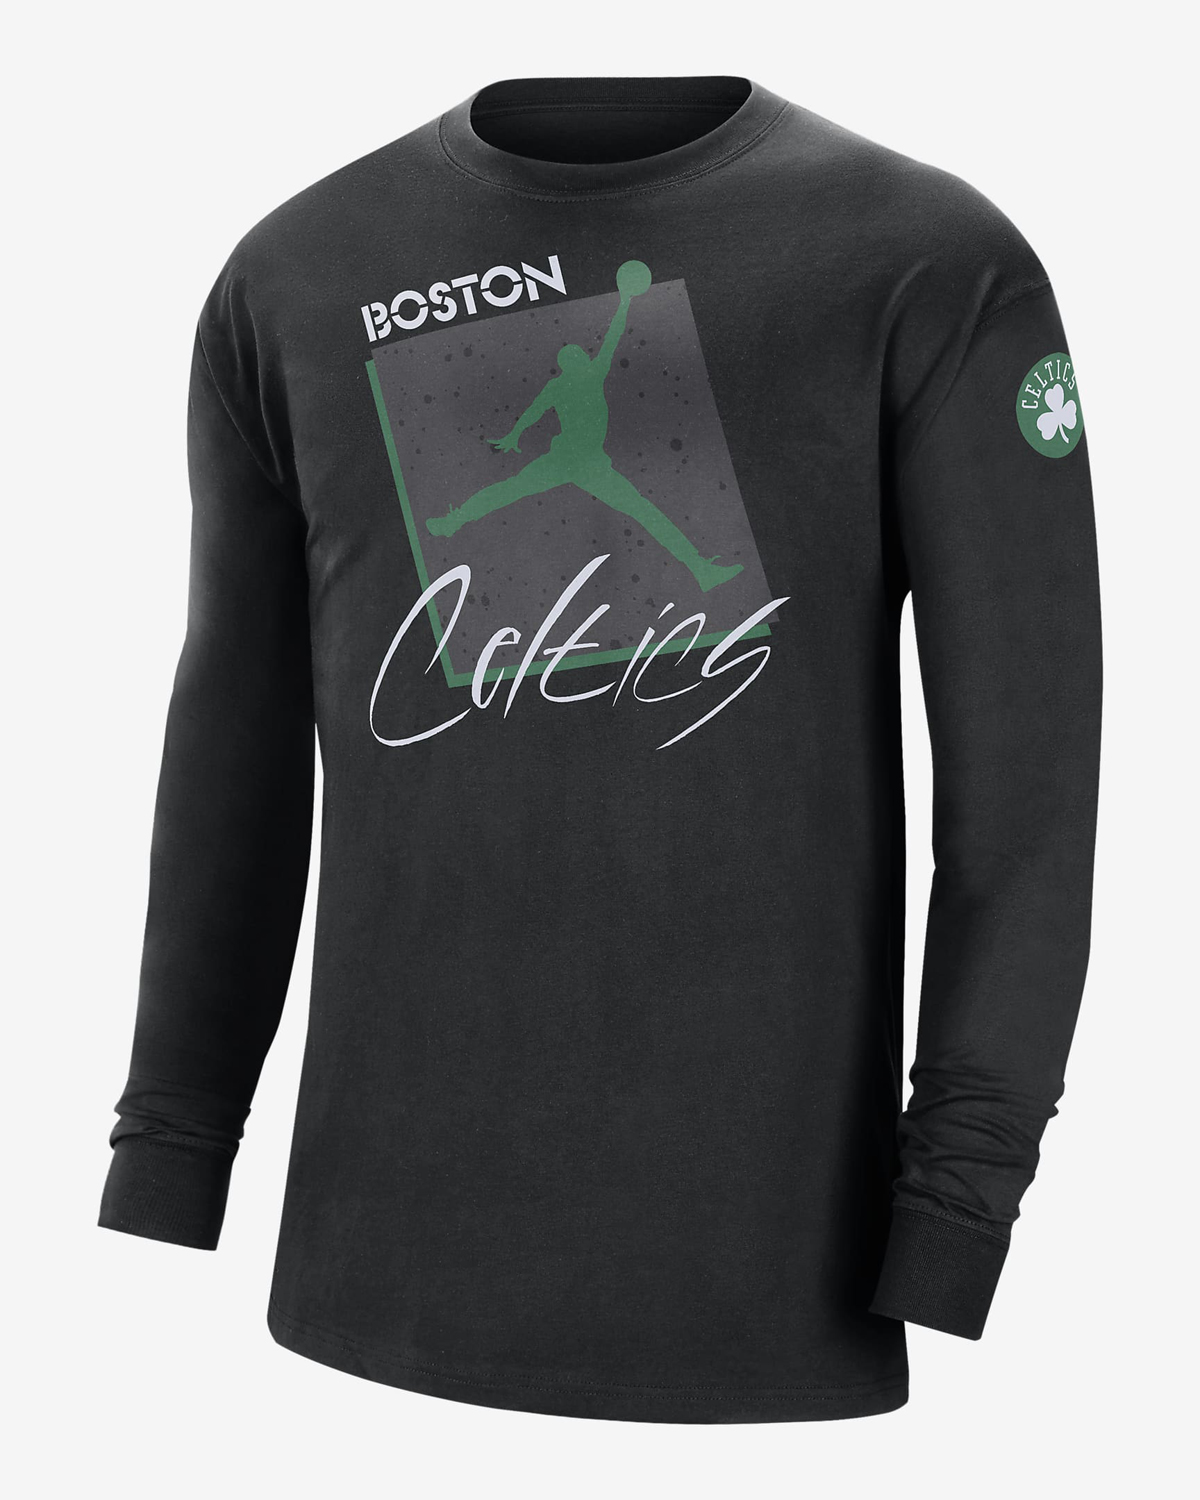 Jordan-Boston-Celtics-Long-Sleeve-T-Shirt